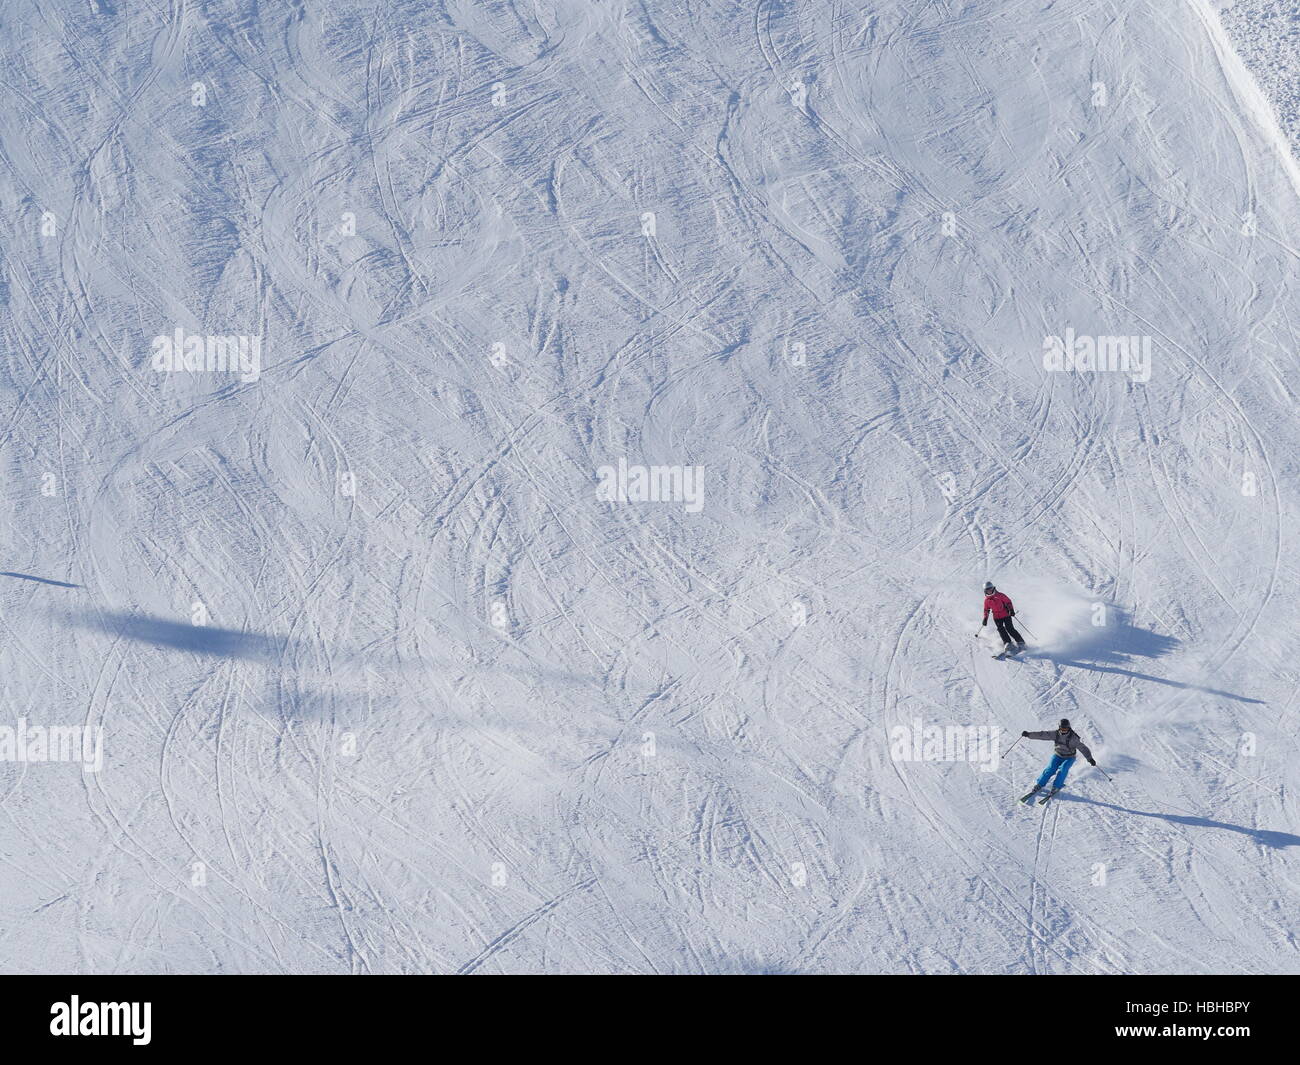 people riding down ski slope Stock Photo